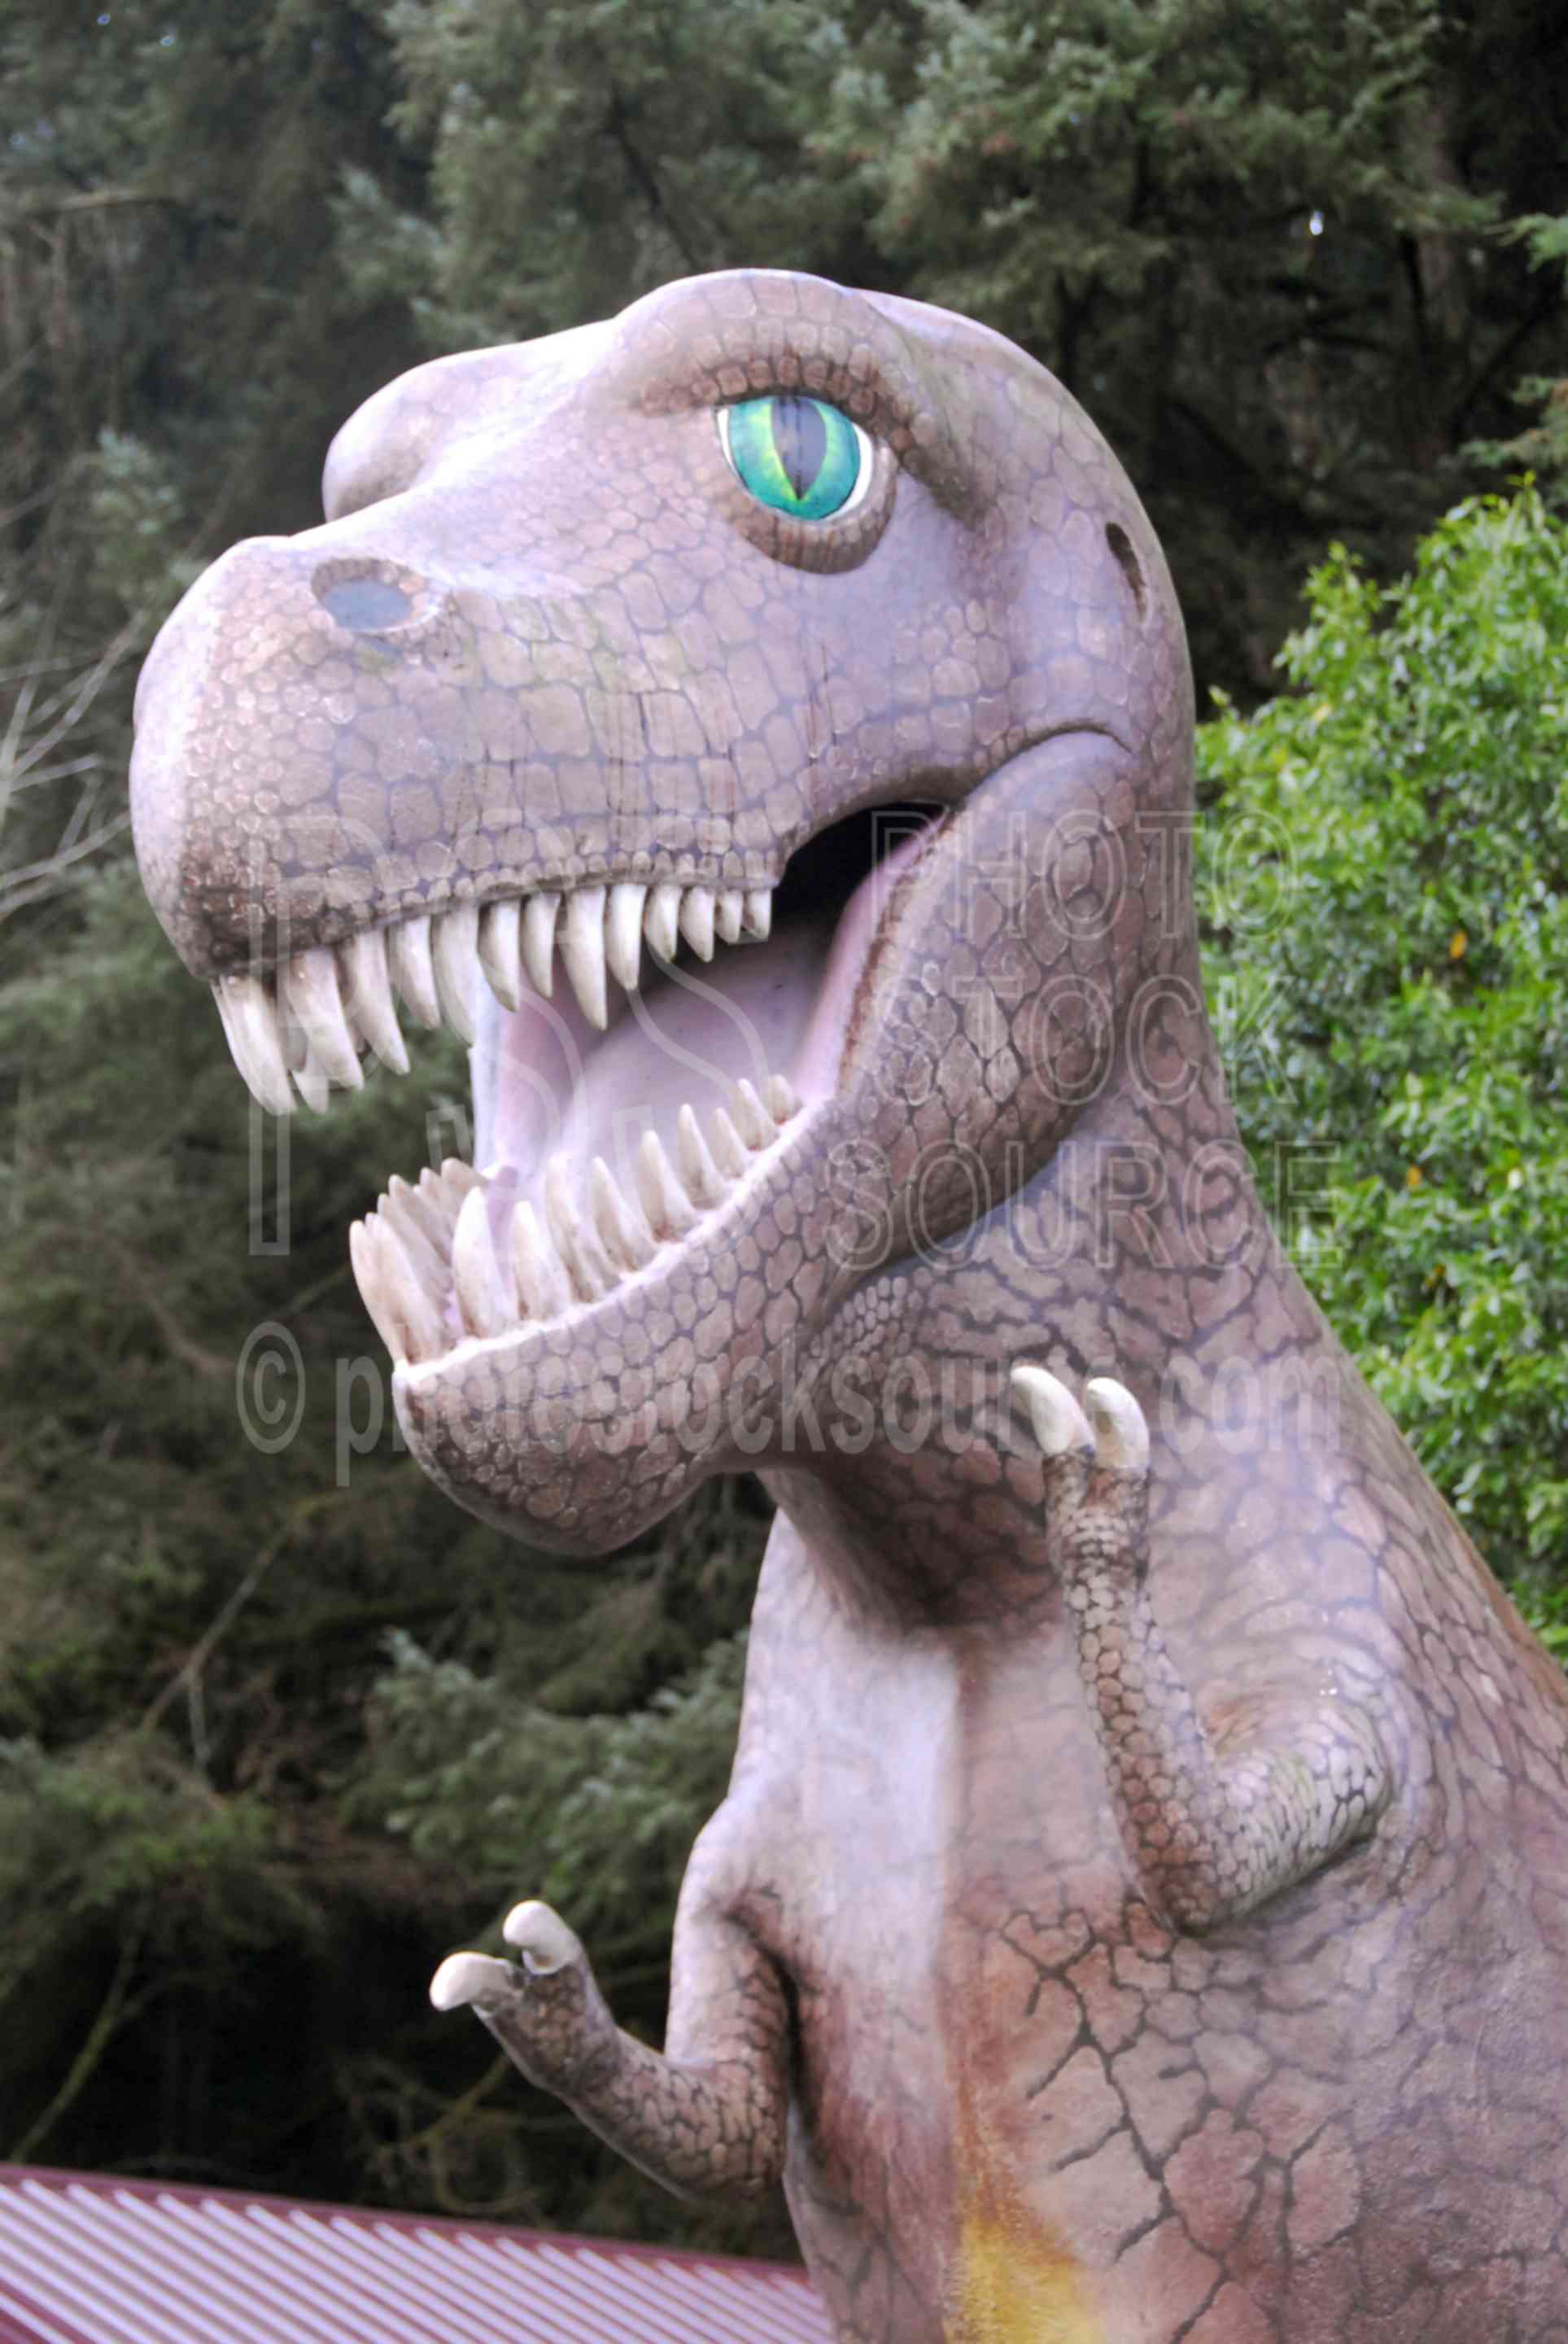 Prehistoric Gardens Dinosaur,reptile,statue,roadside,tourist trap,tourism,fantasy,dinosaur,tryranosaurus rex